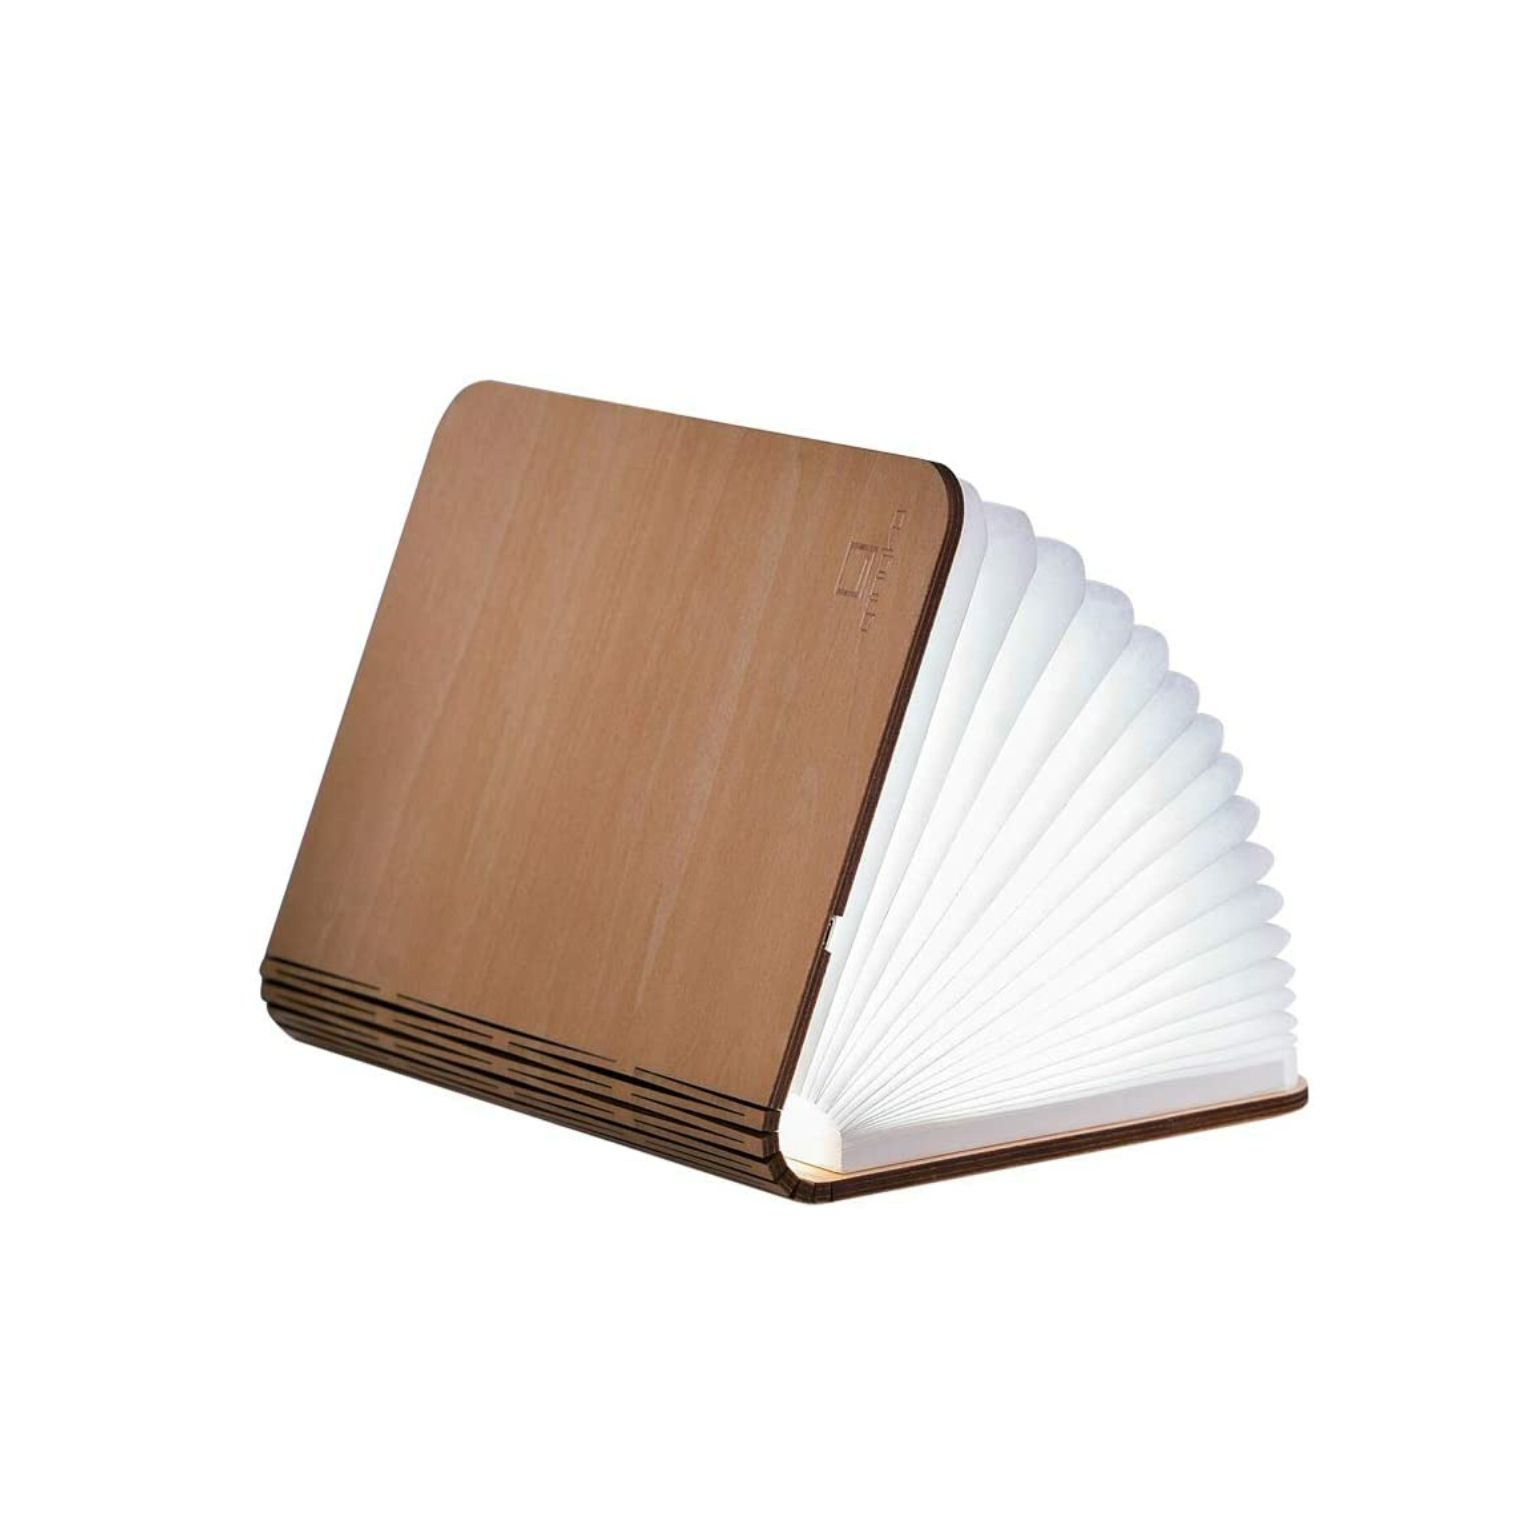 Gingko Natural Wood Smart Book Light Large Maple